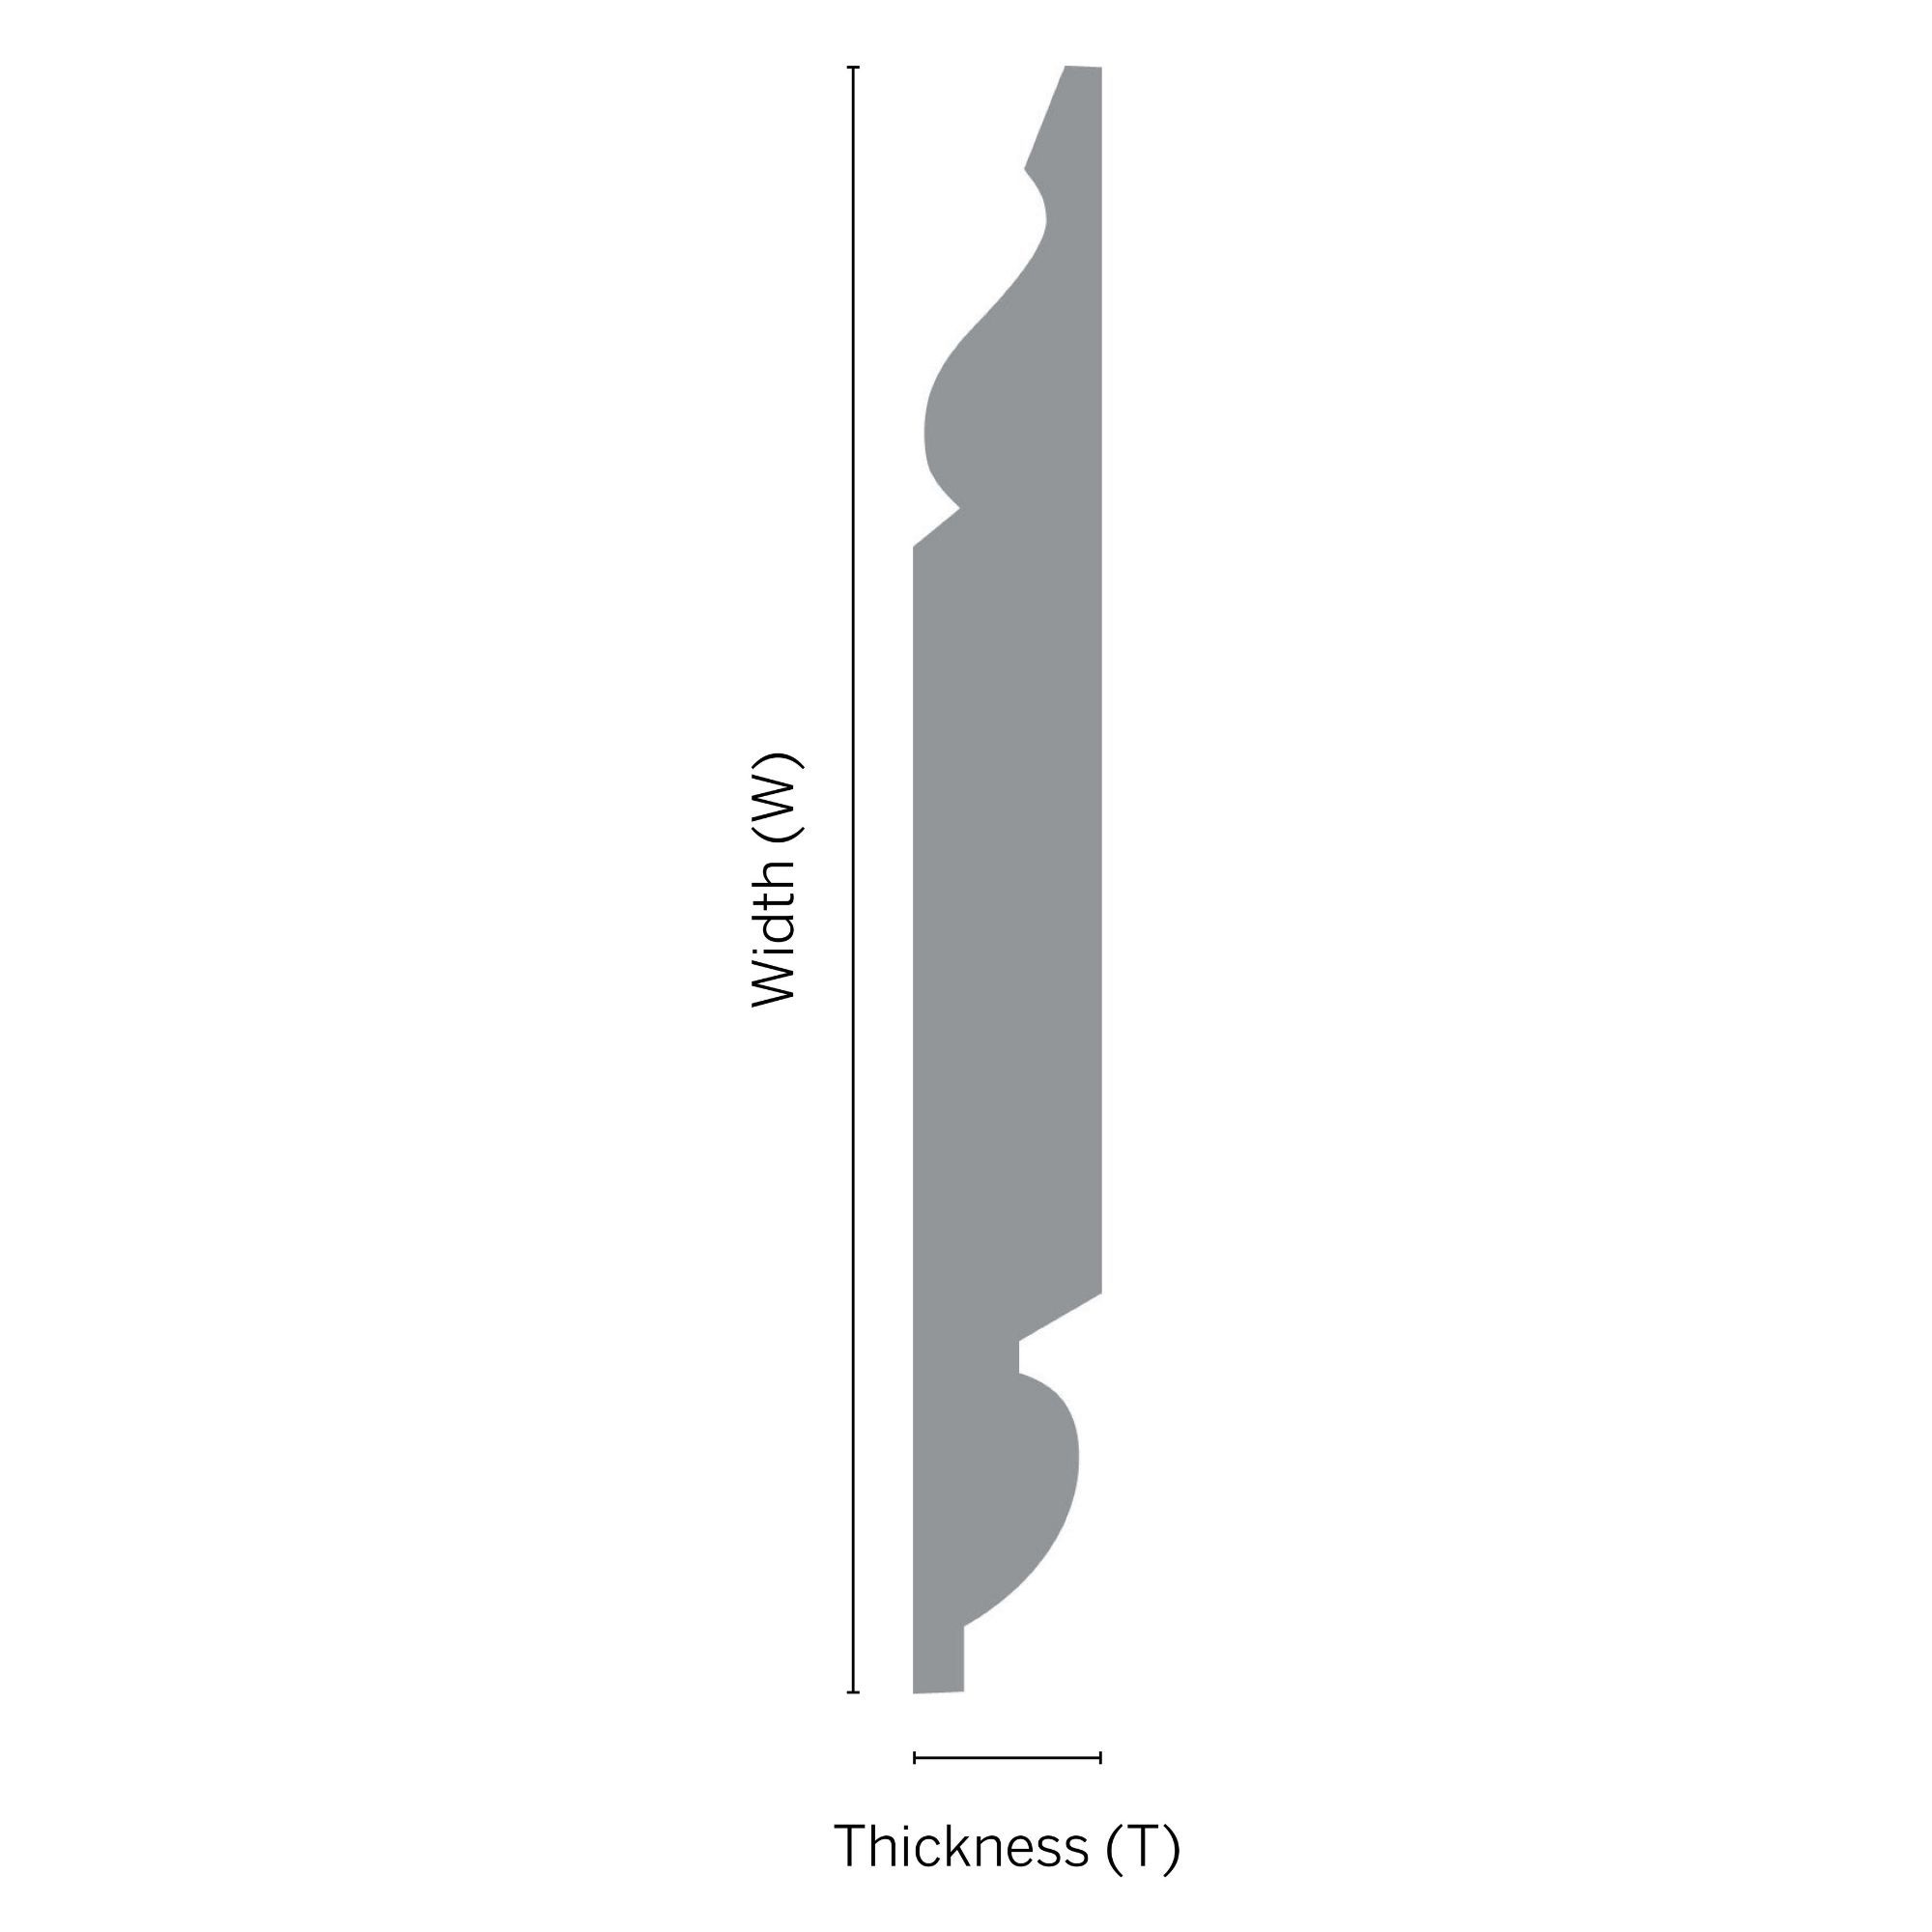 Metsä Wood Planed Pine Dual profile Skirting board (L)3.6m (W)169mm (T)19.5mm